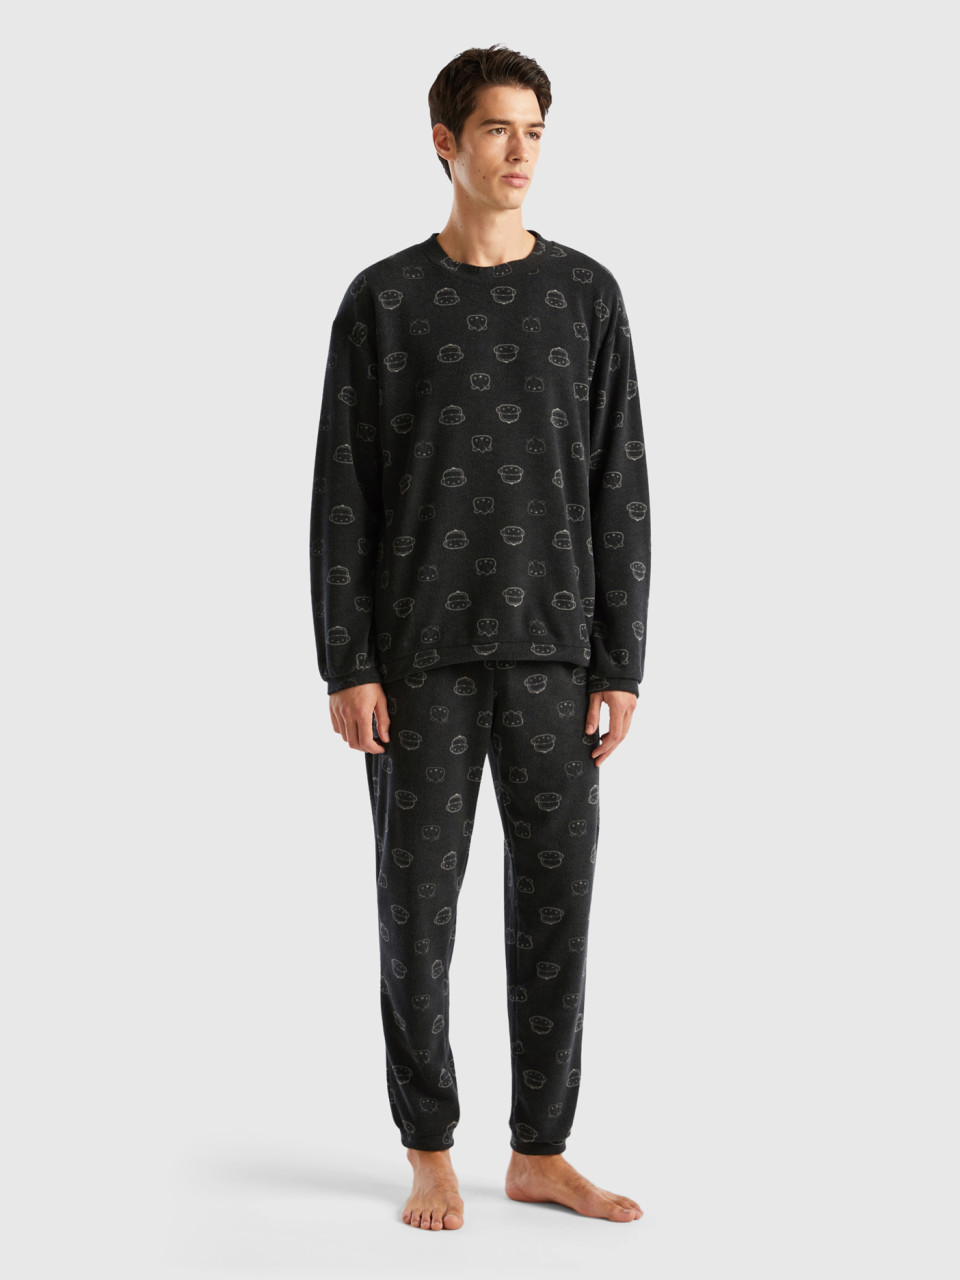 Benetton, Fleece Pyjamas With Mascot Print, Black, Men